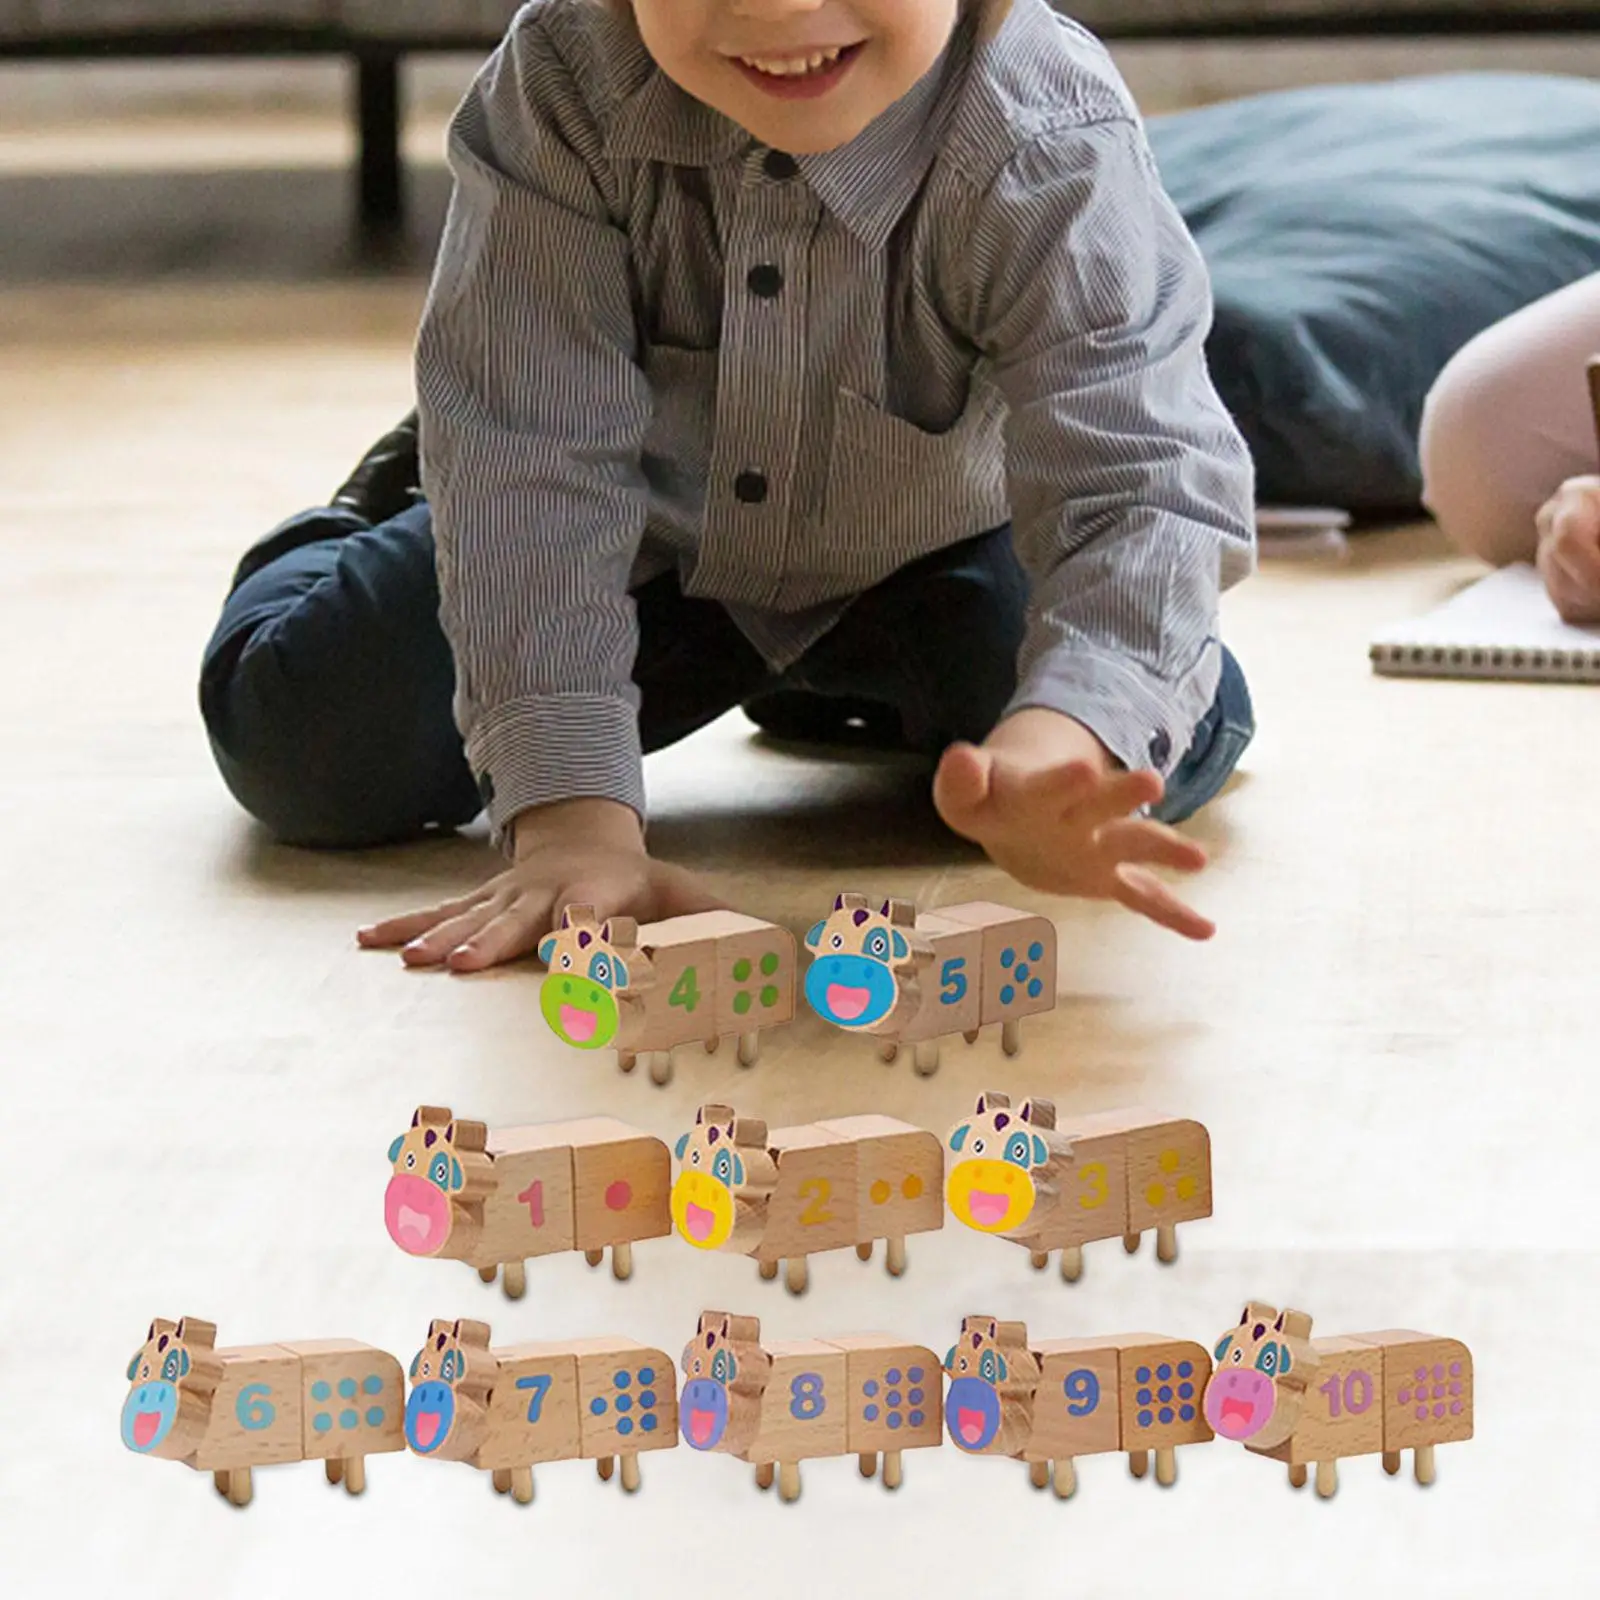 10x Wooden Building Blocks Fine Motor Skill Preschool Learning Montessori Educational Toys for Girls Boys Kids Holiday Gifts